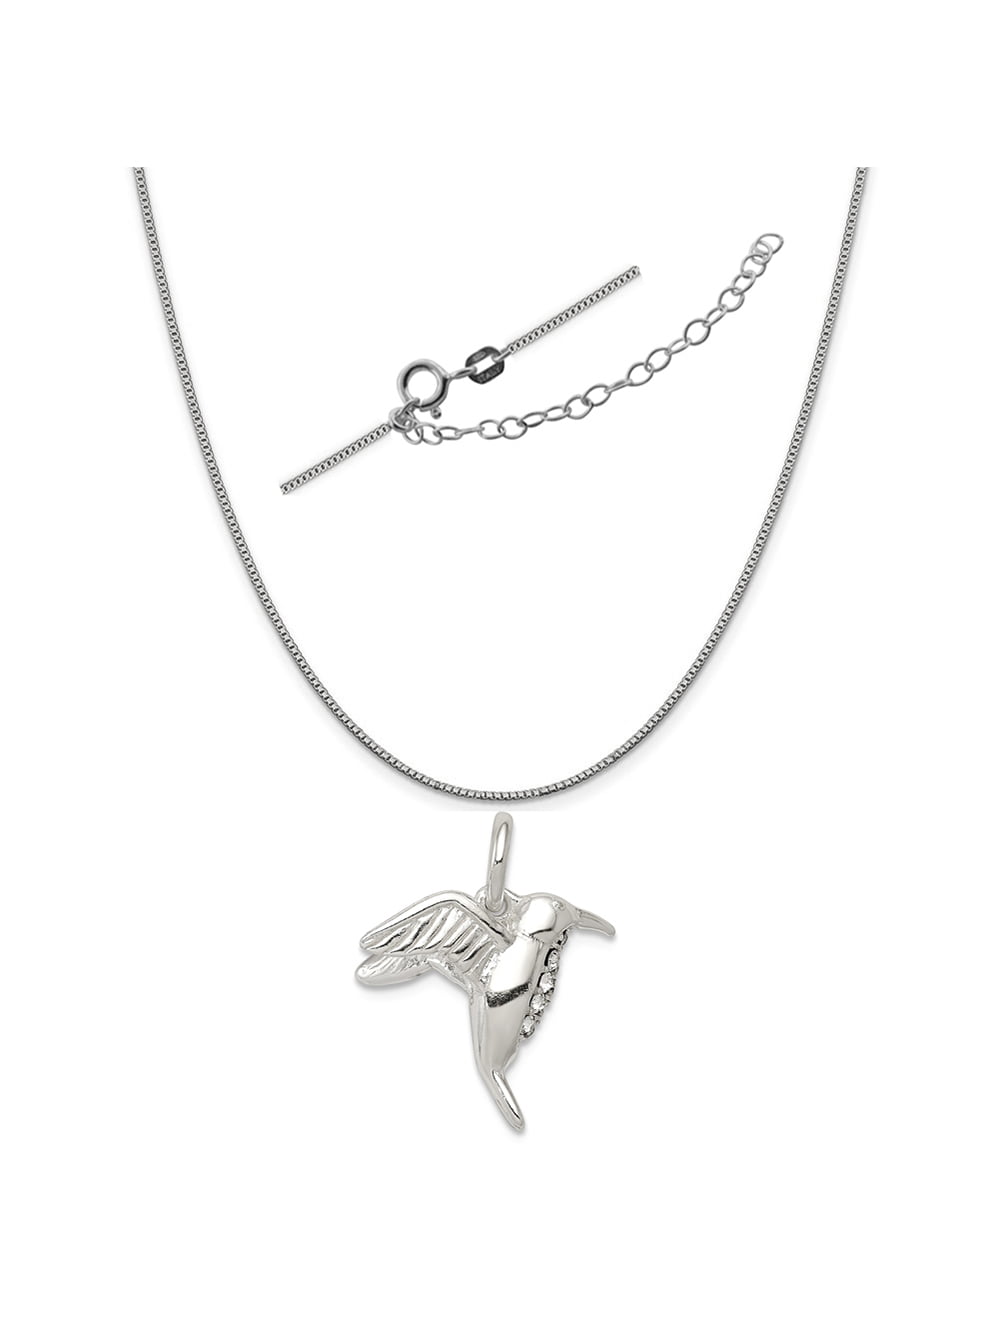 Hummingbird Jewelry Includes 18 Chain Bird Art Hummingbird Jewelry Charm Pendant Necklace Blue Hummingbird 20mm Necklace